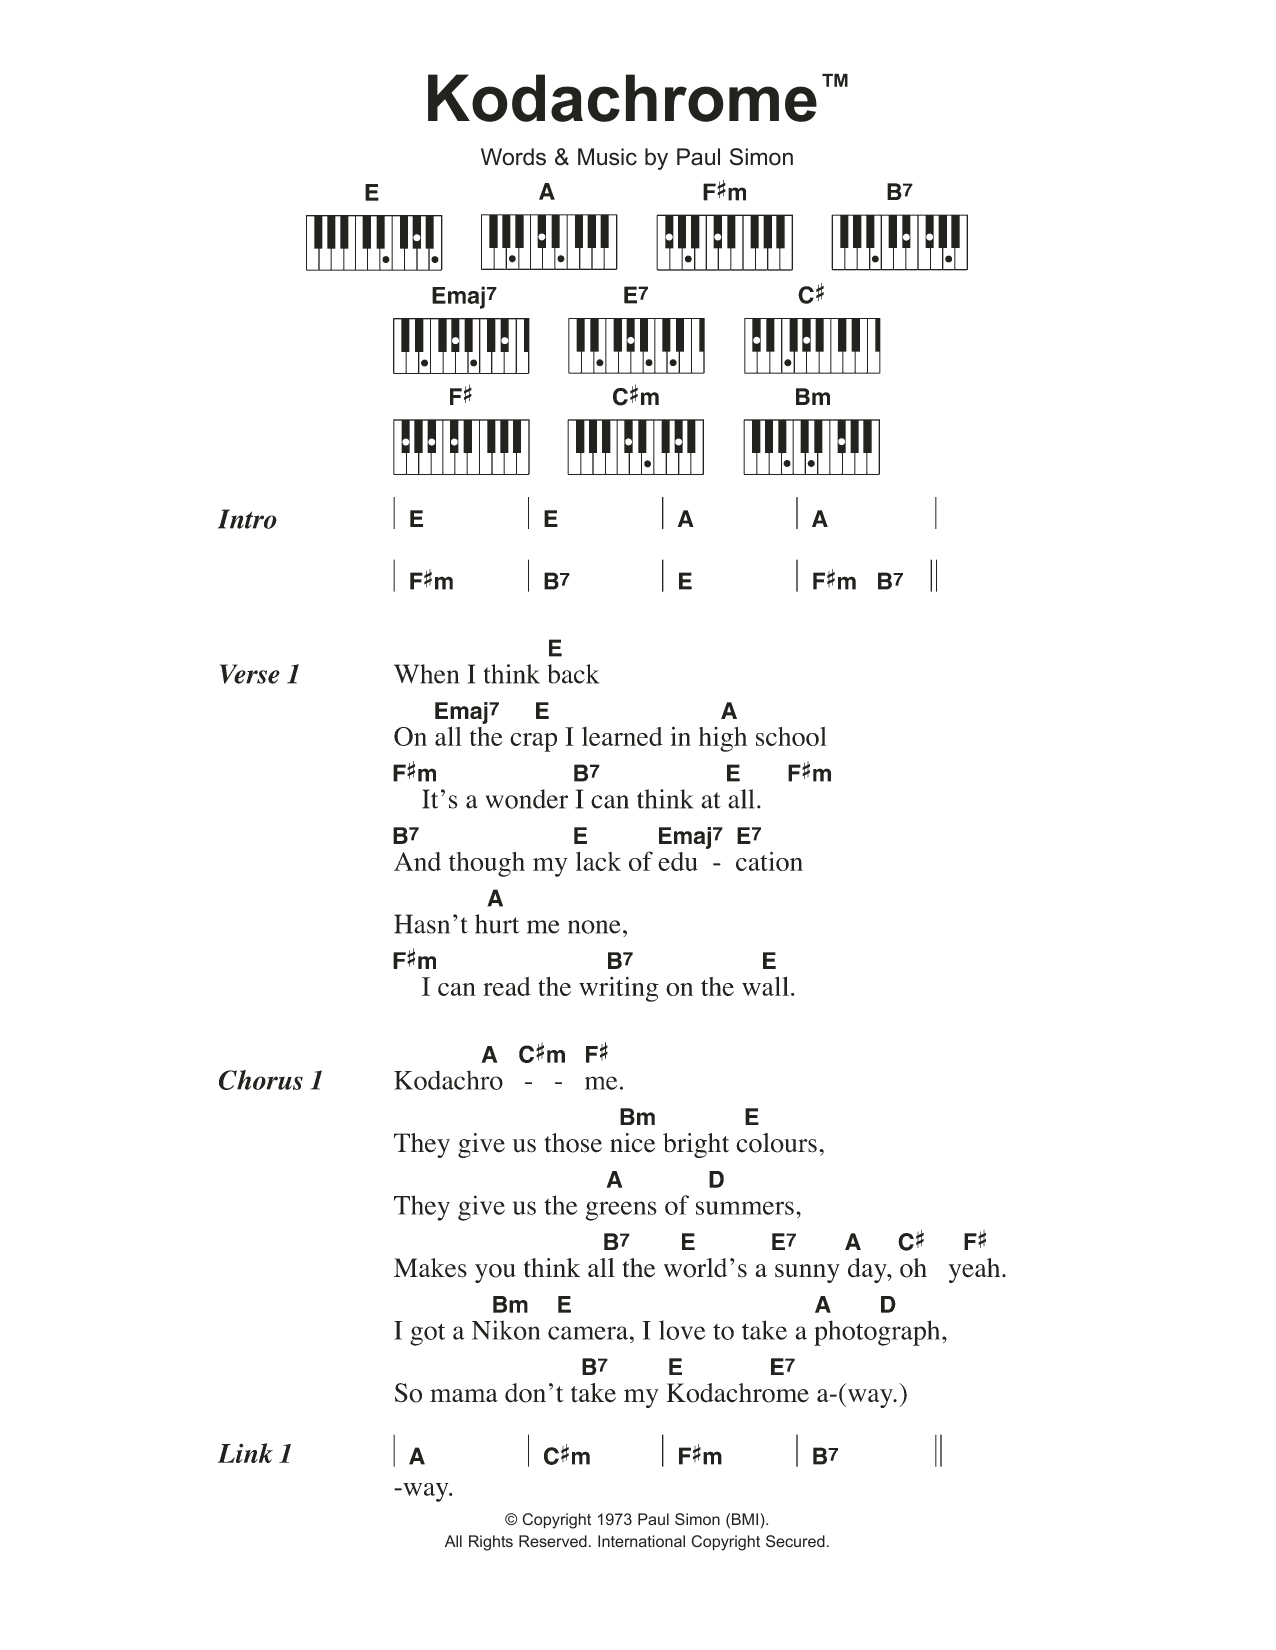 Paul Simon KodachromeTM Sheet Music Notes & Chords for Guitar Chords/Lyrics - Download or Print PDF